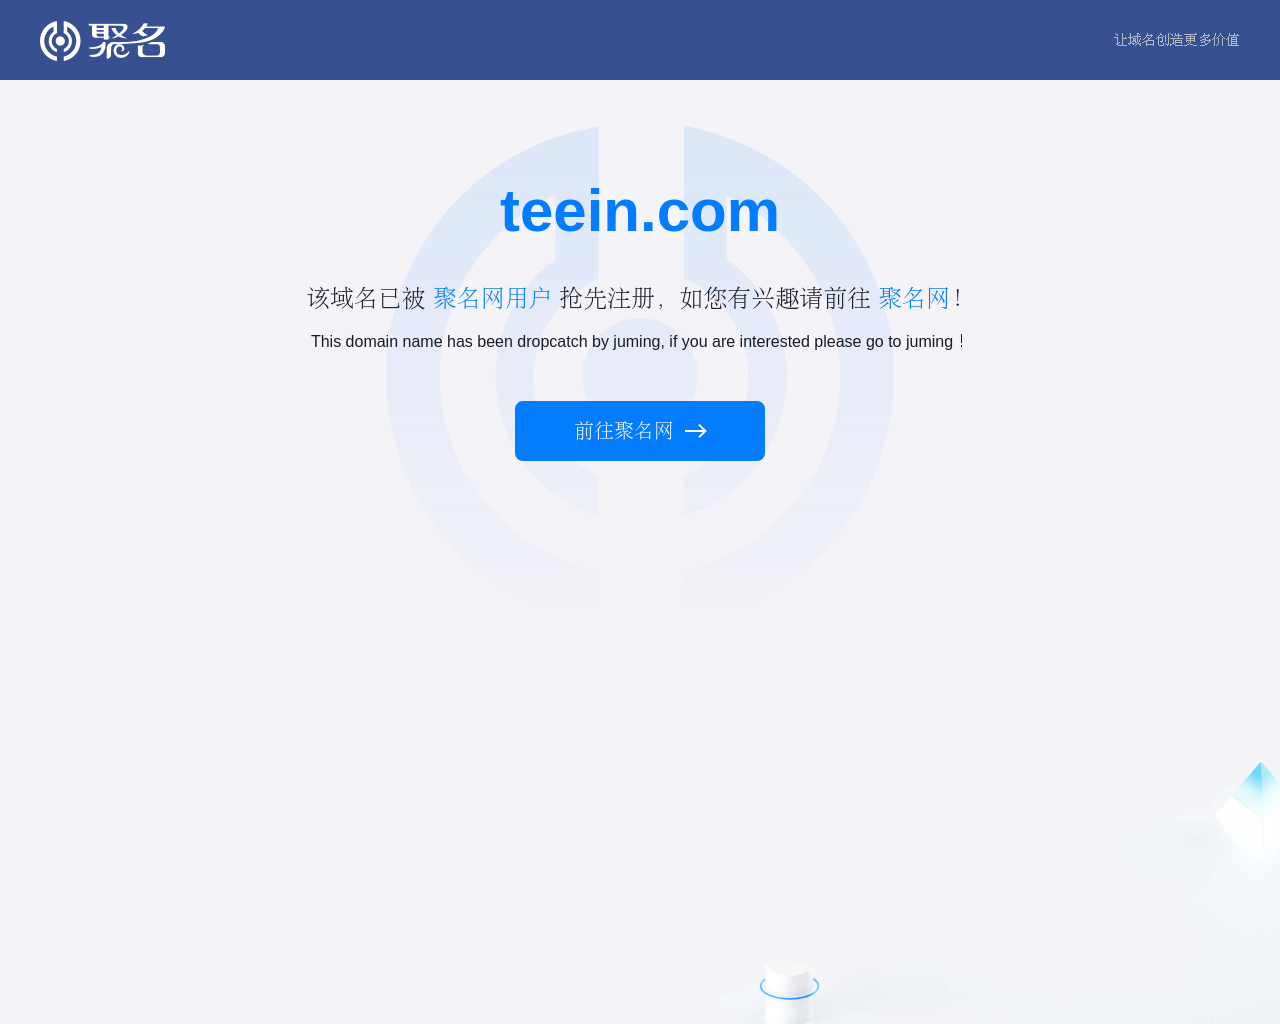 teein.com